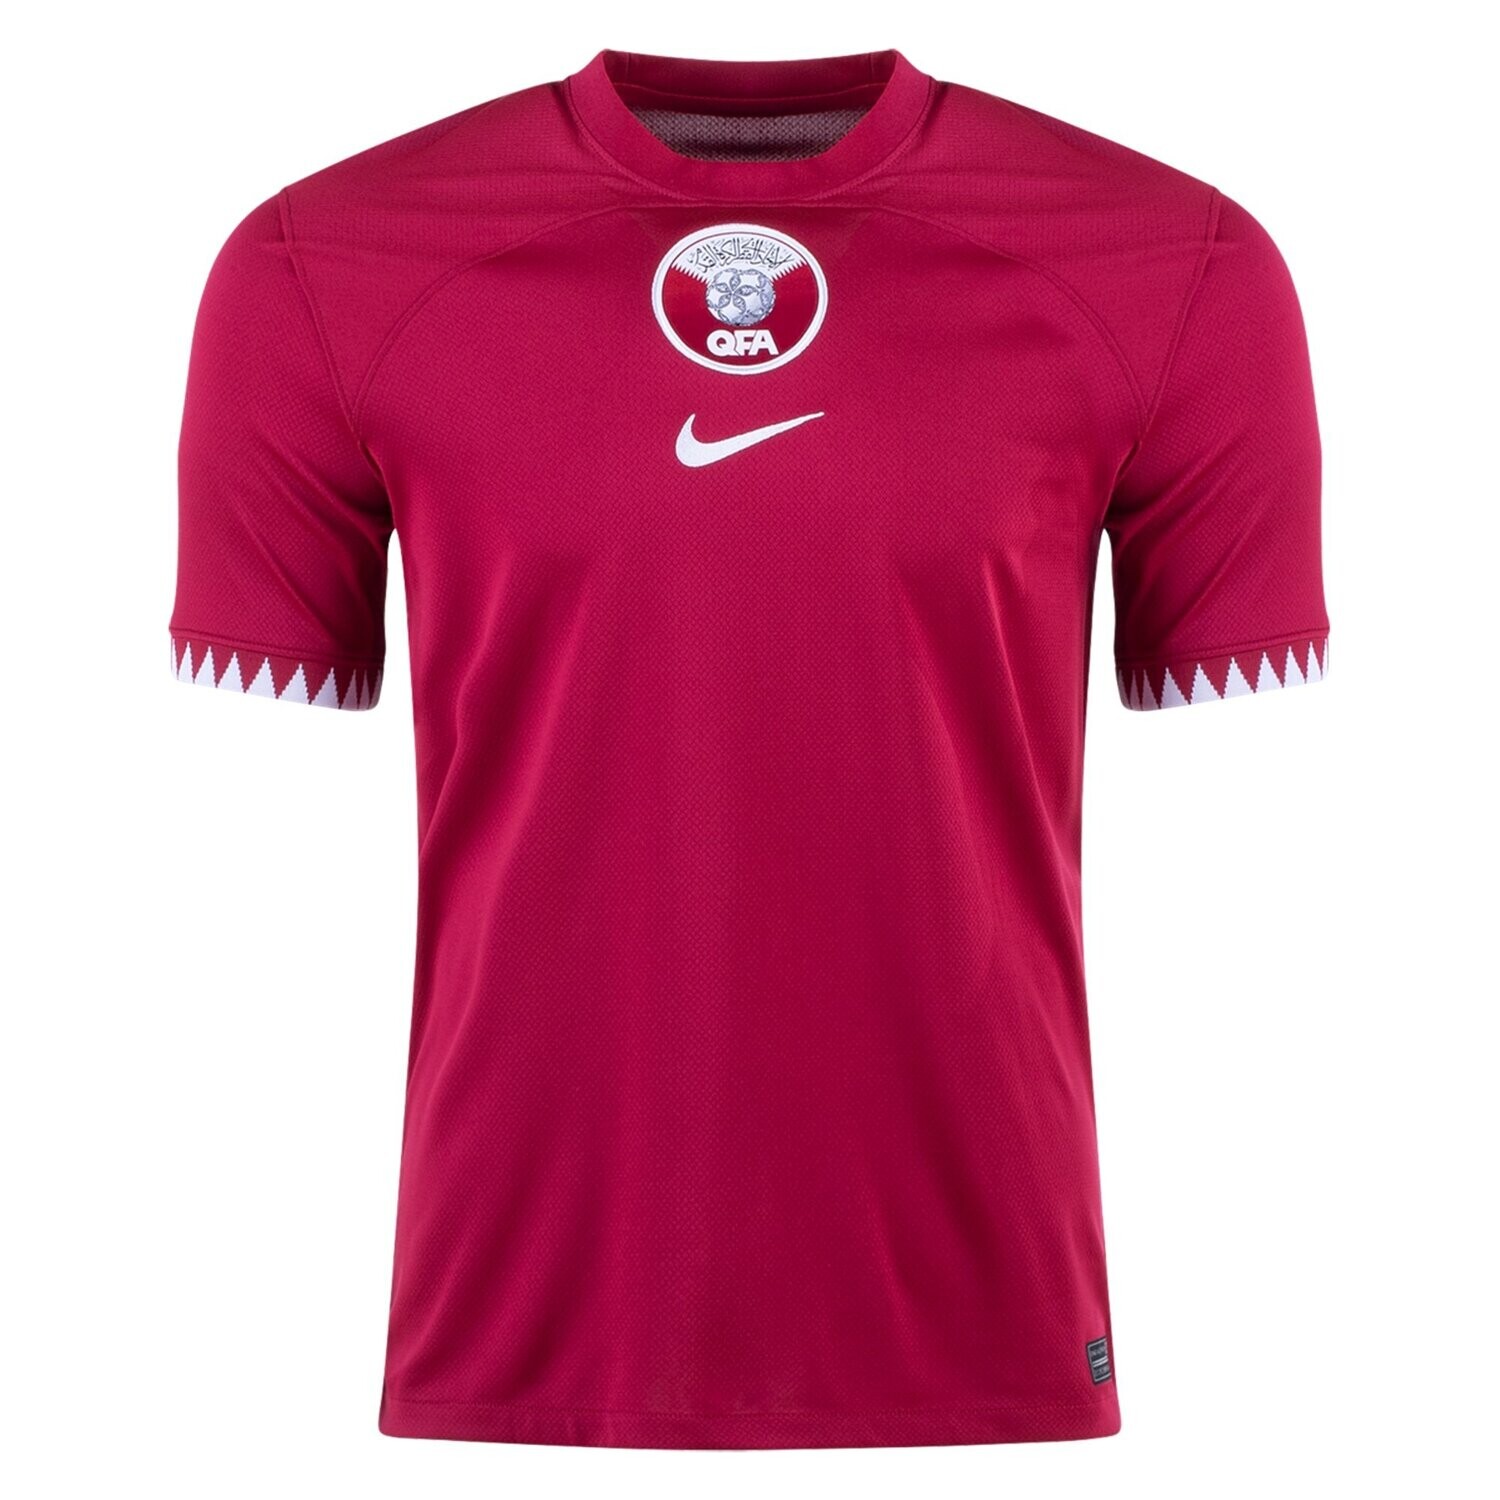 Qatar 2022 Home World Cup Jersey